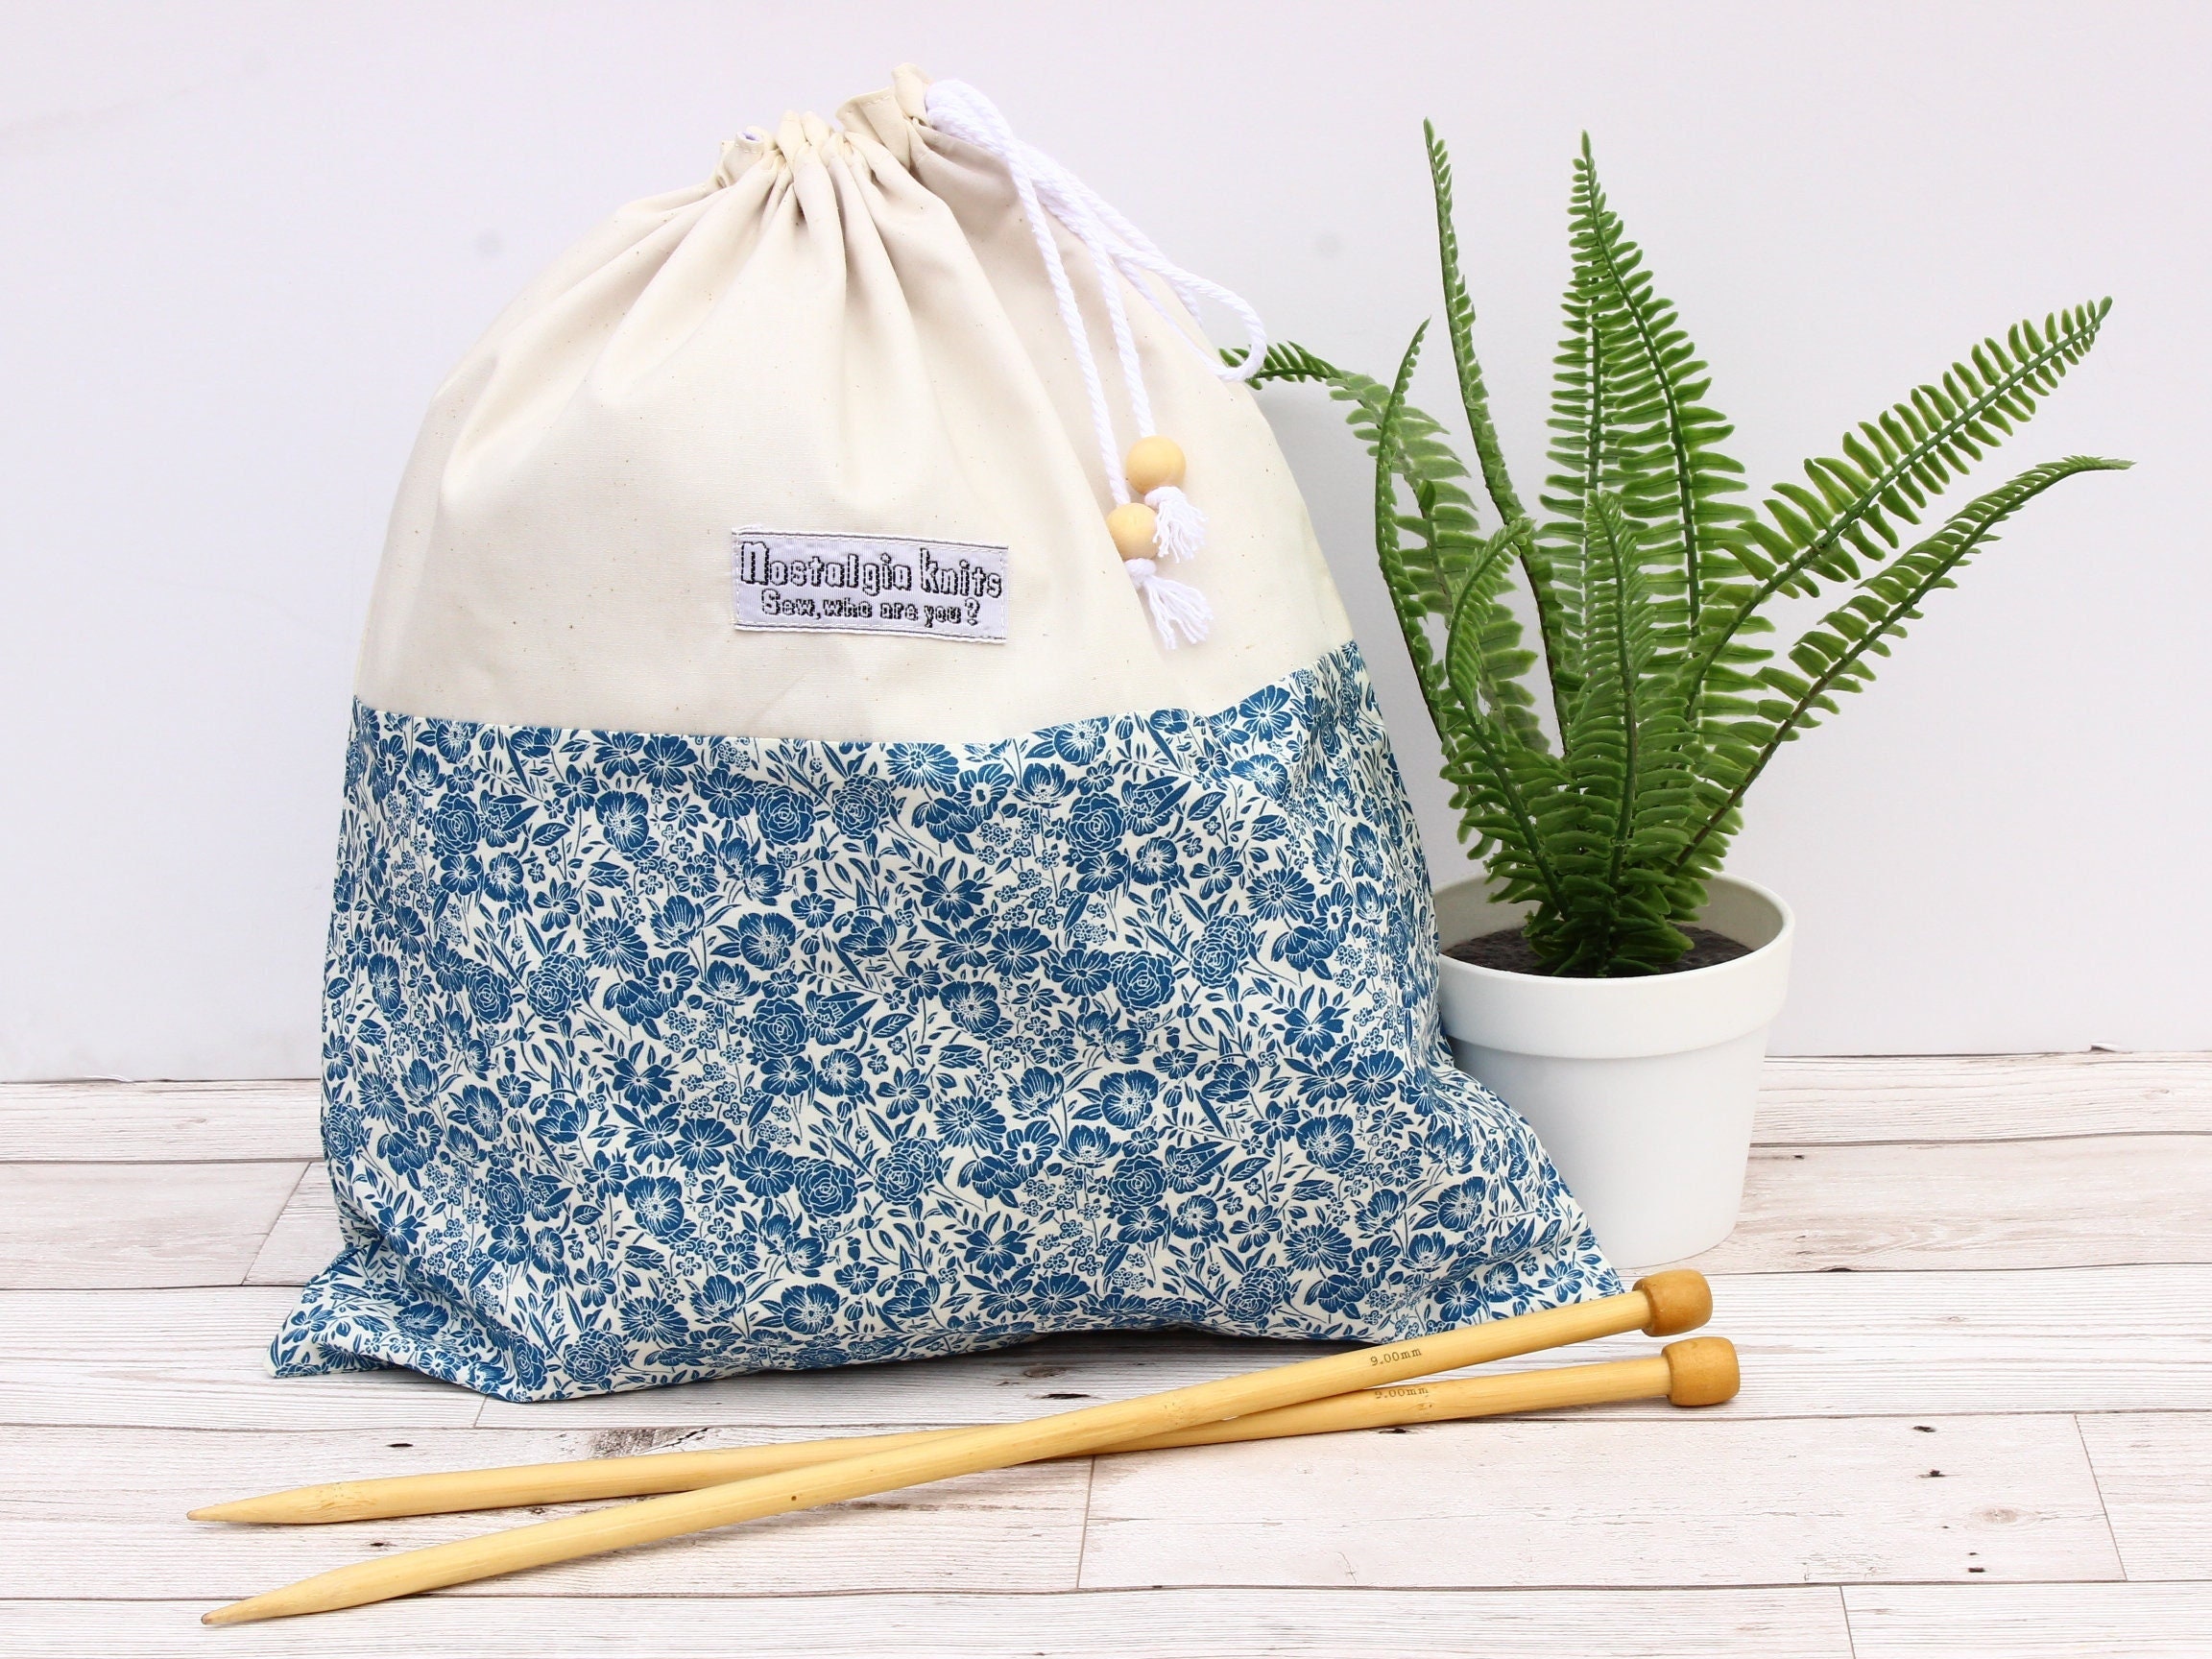 Crochet Tote Bag, Knitting Tote Bag, Personalised Bag, Knitting Project  Bag, Yarn Bag, Knitting Storage, Grandma Knitting, Cute Mum Gift 